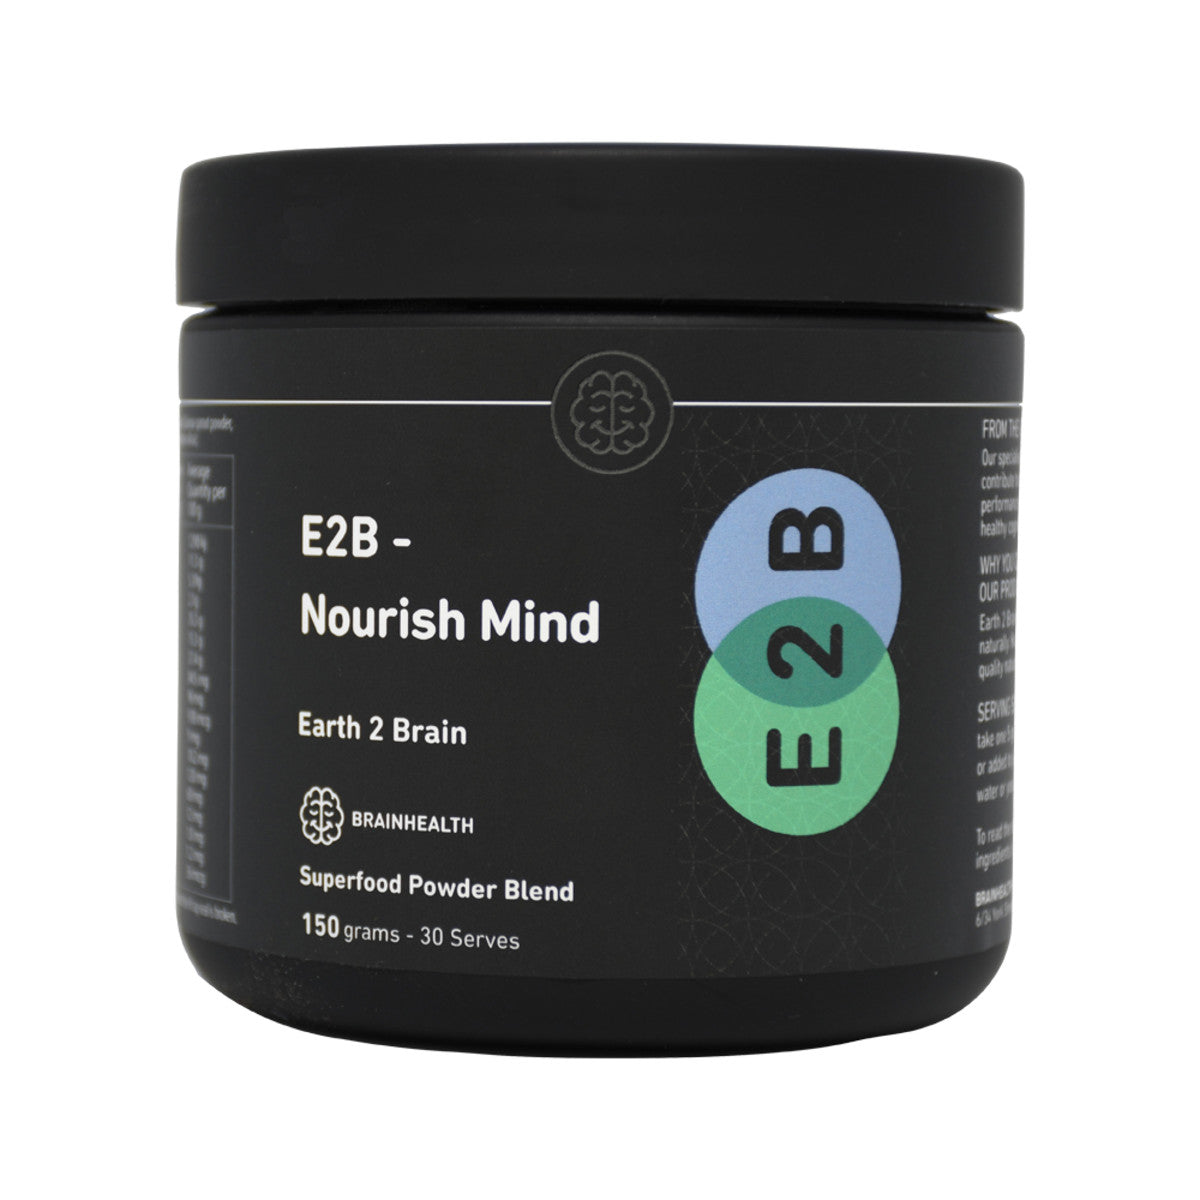 Earth 2 Brain - (E2B) Nourish Mind